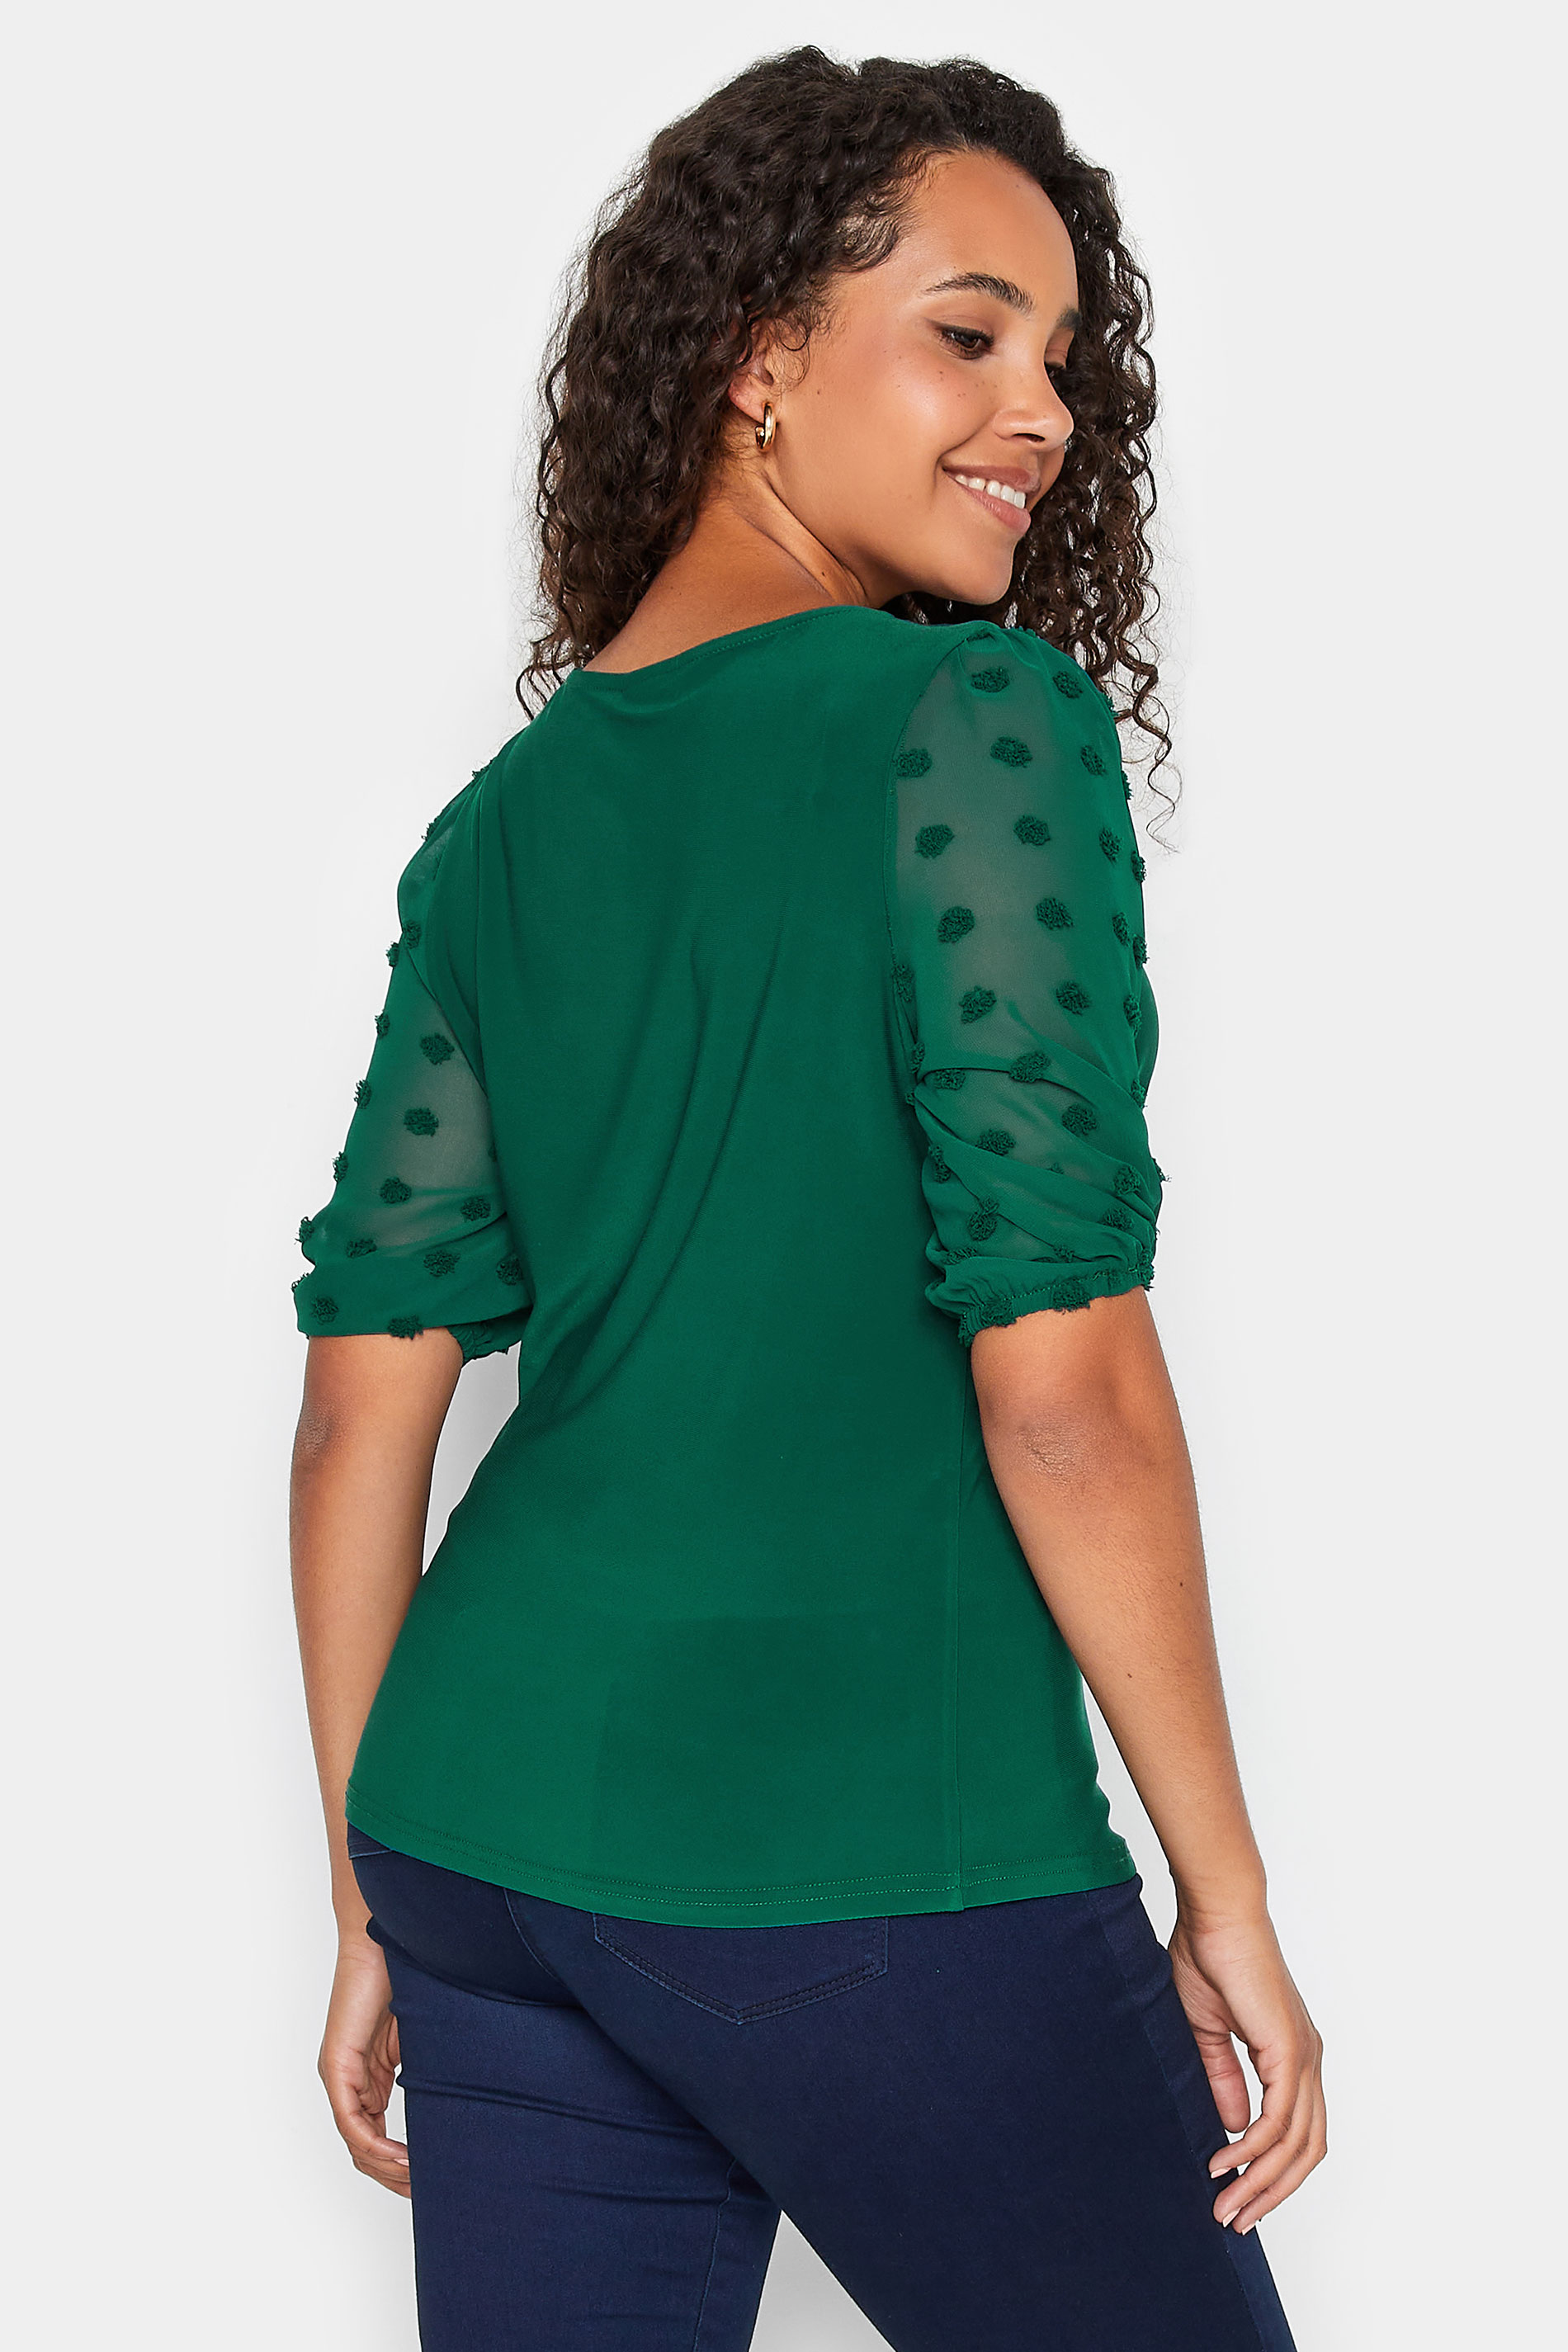 M&Co Dark Green Dobby Short Sleeve Blouse | M&Co  3